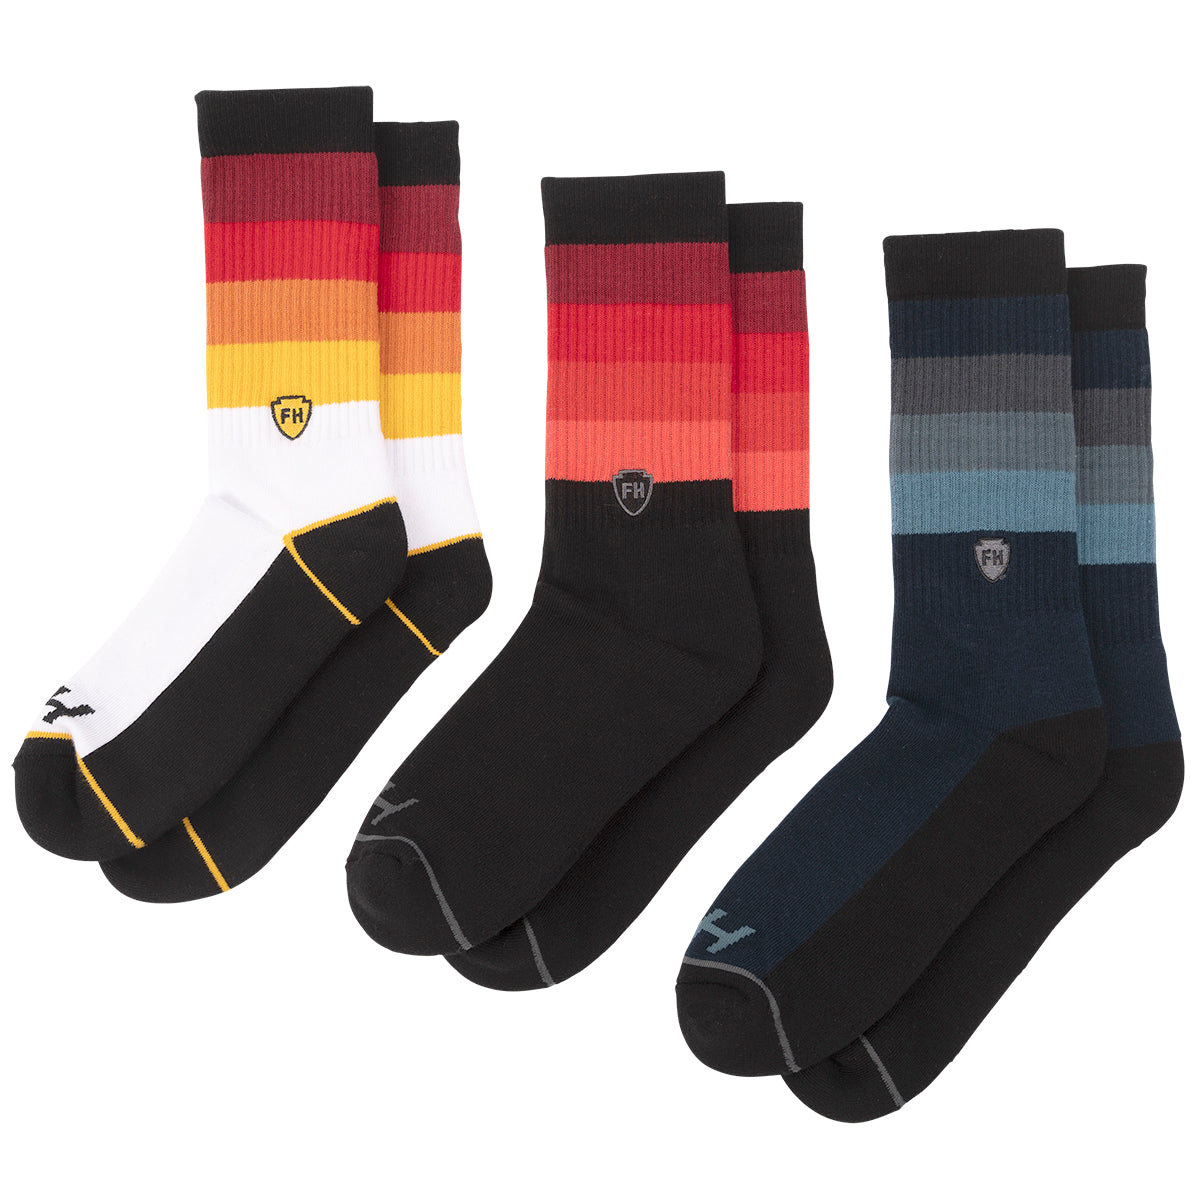 Eclipse Socks, 3-Pack - Multi